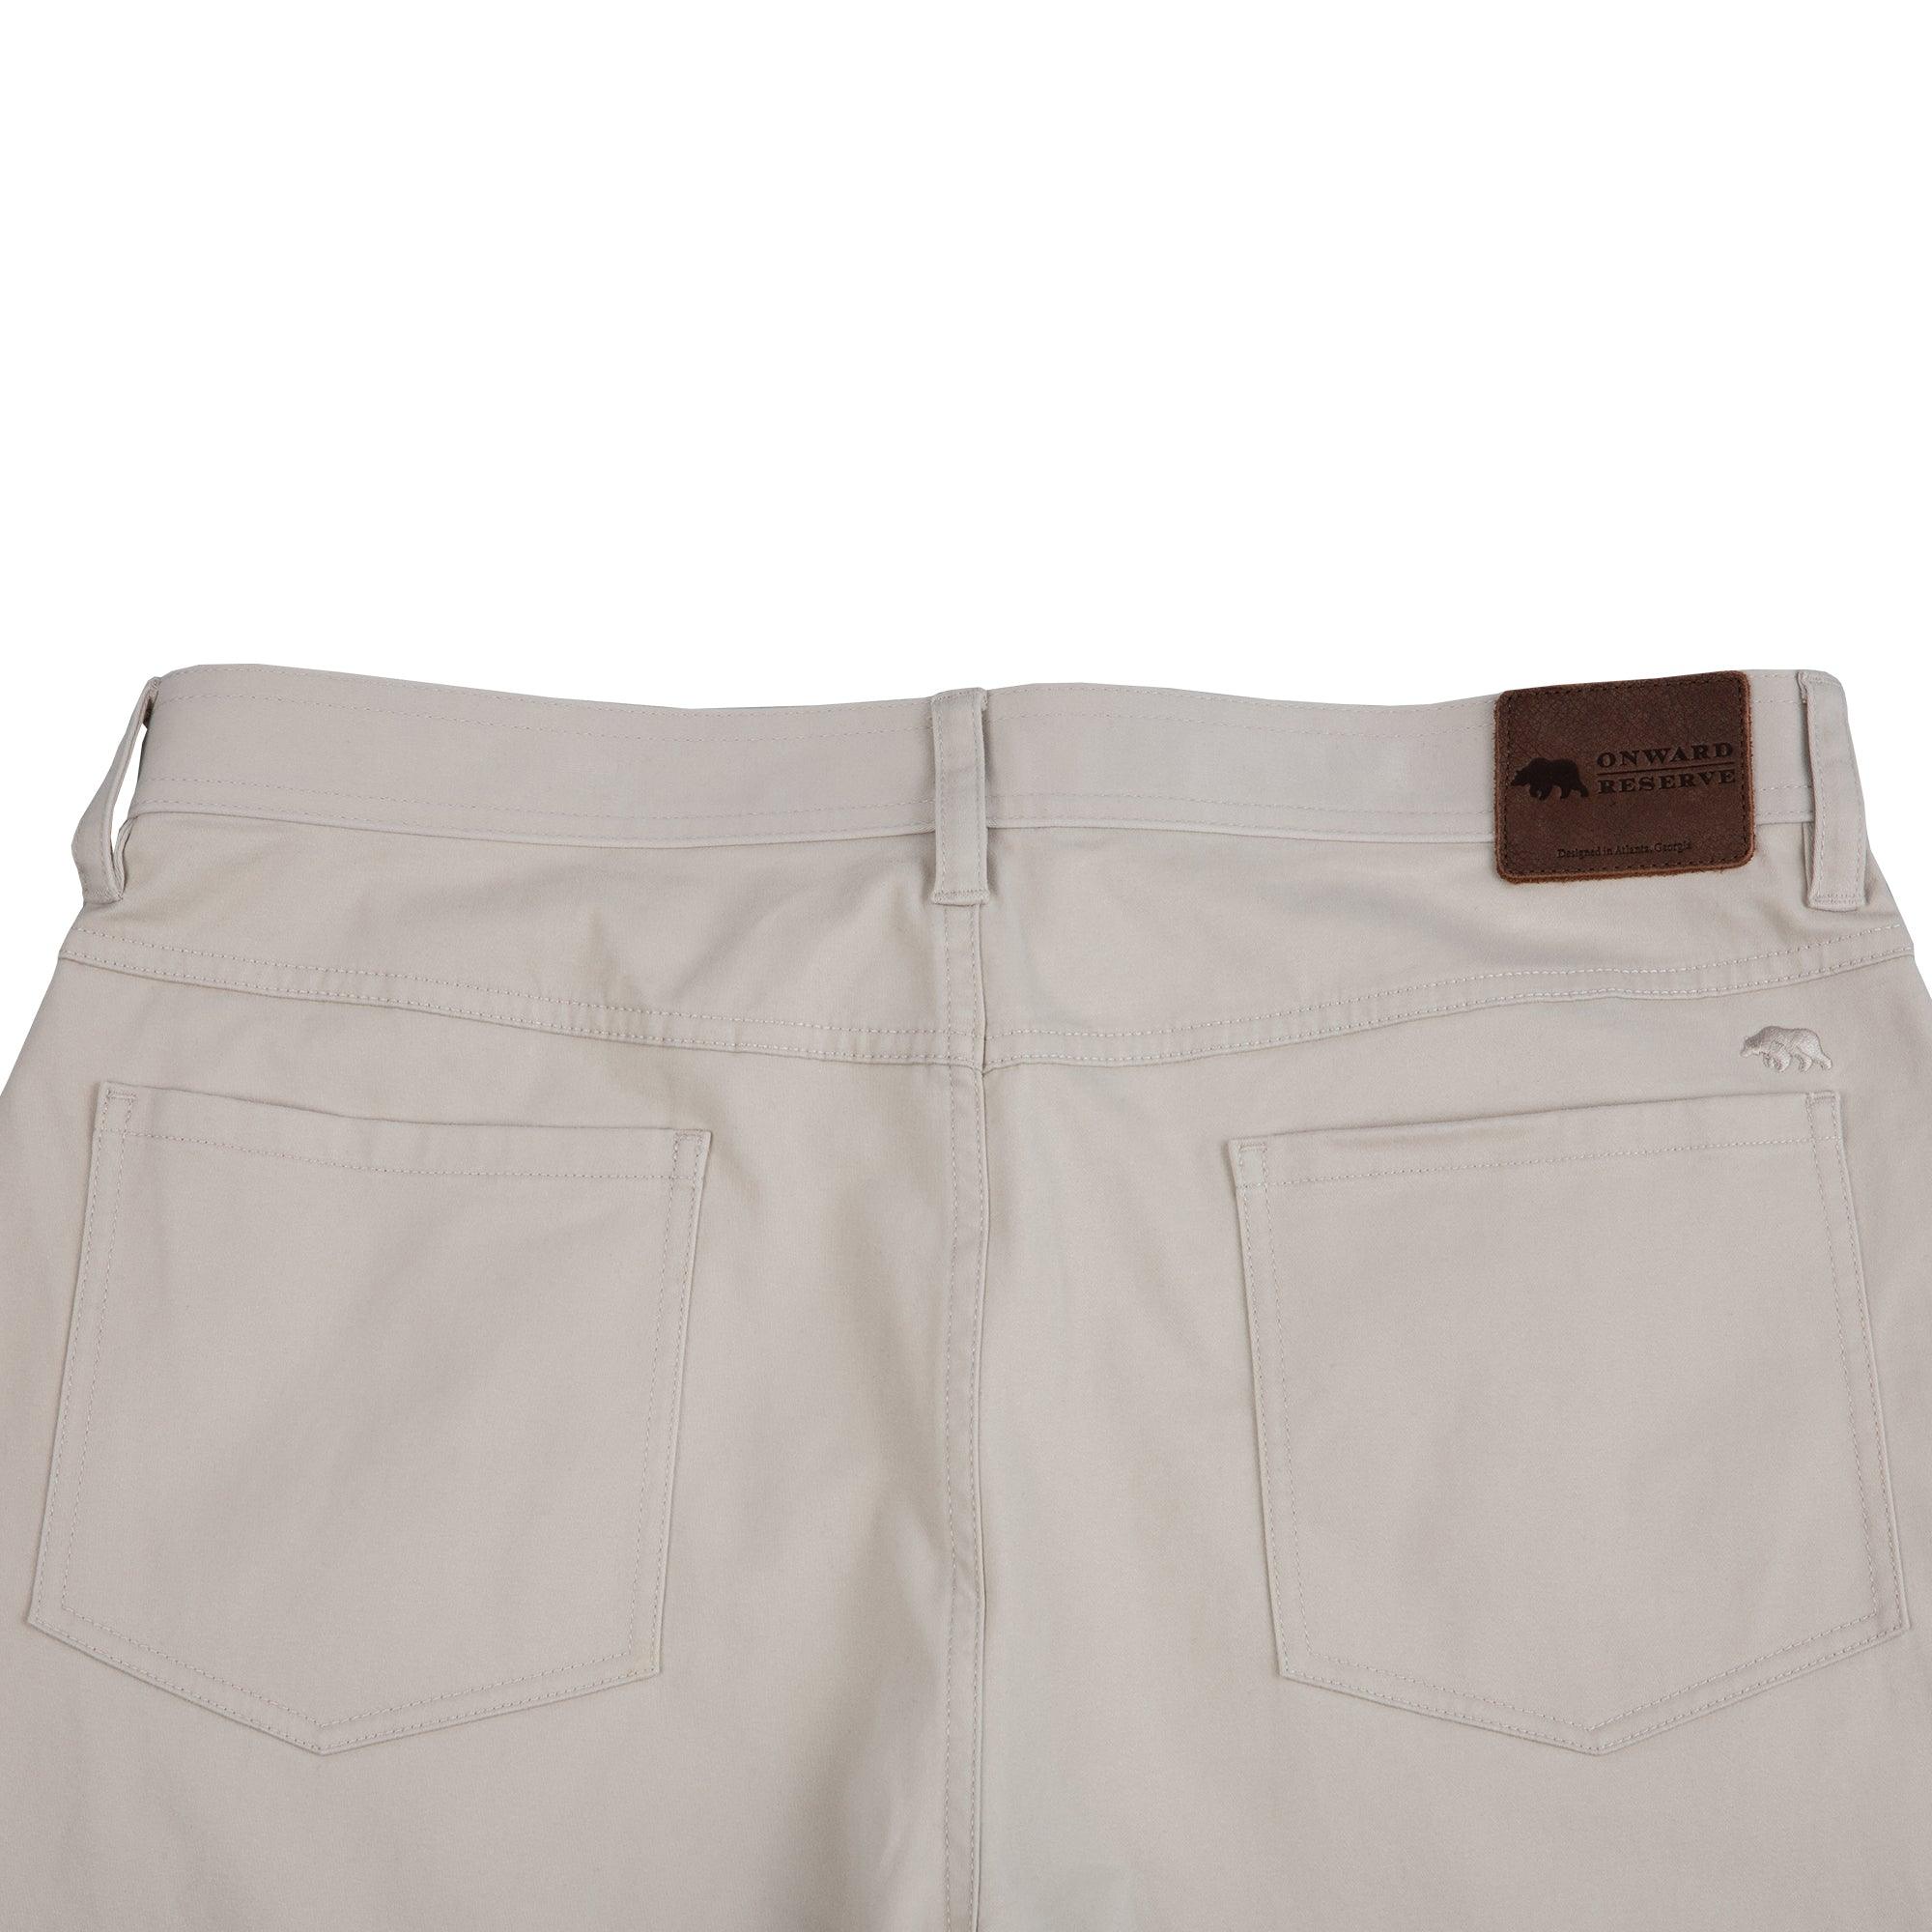 Cleek flex trousers - grey Trousers - MEN | Golf clothing | Aba